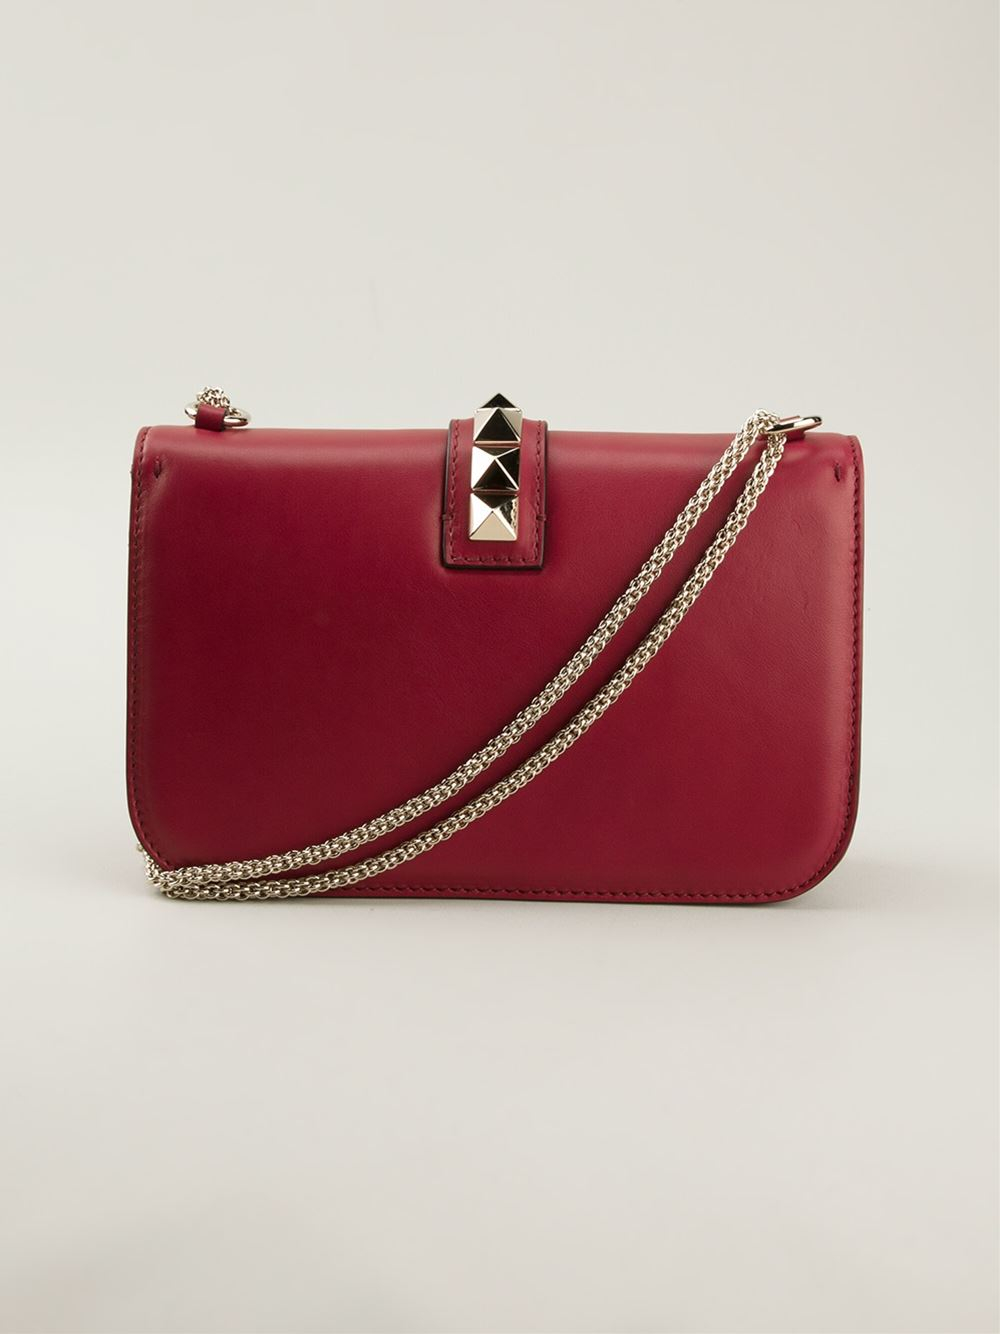 Lyst - Valentino Medium Glam Lock Shoulder Bag in Red